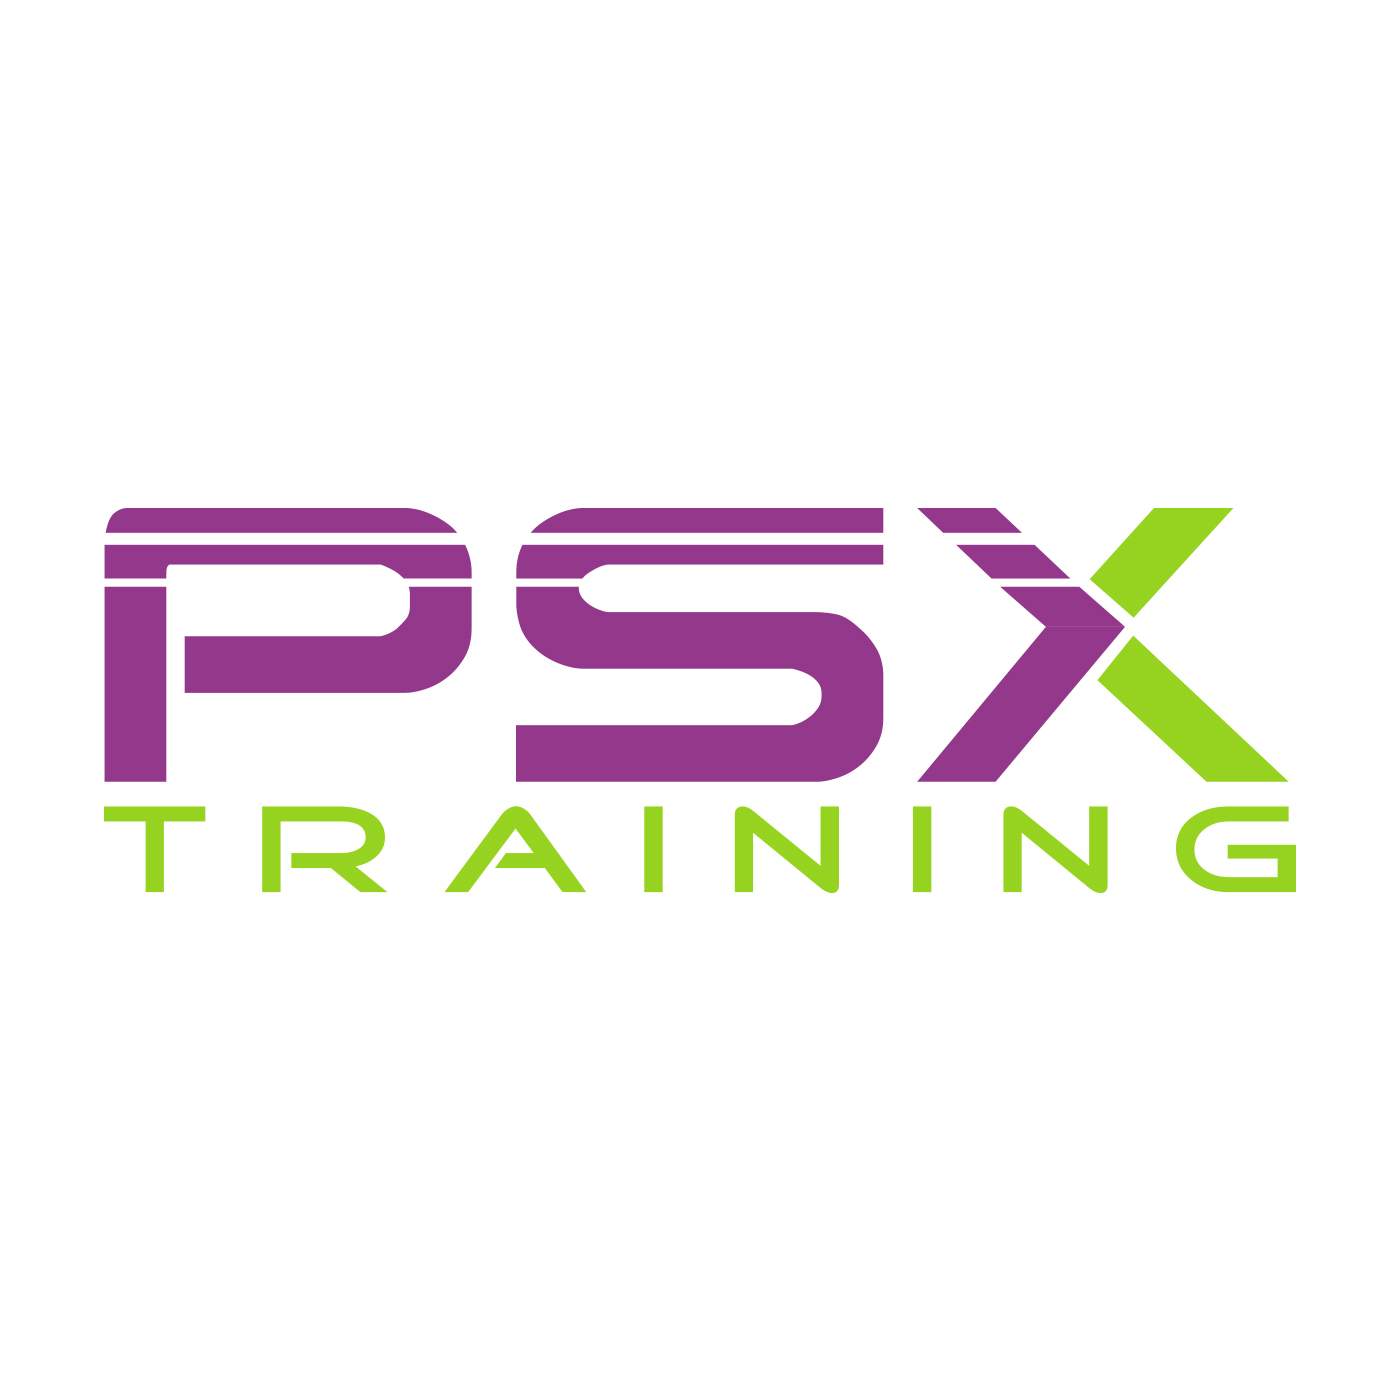 PSX Logo - PSX